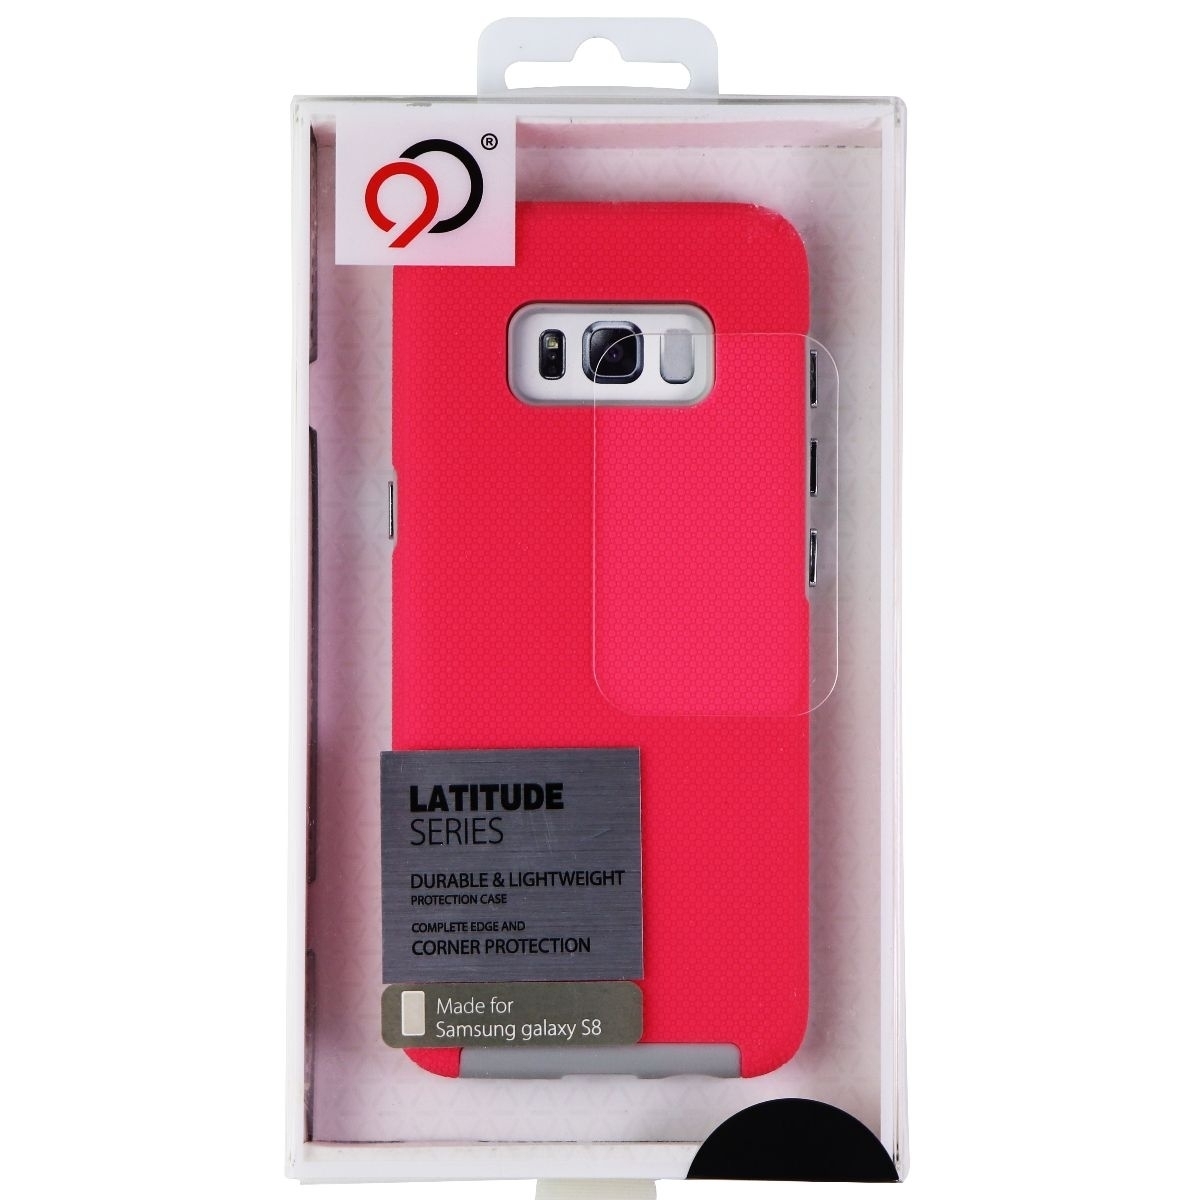 Nimbus9 Latitude Series Case For Samsung Galaxy S8 - Pink/Gray